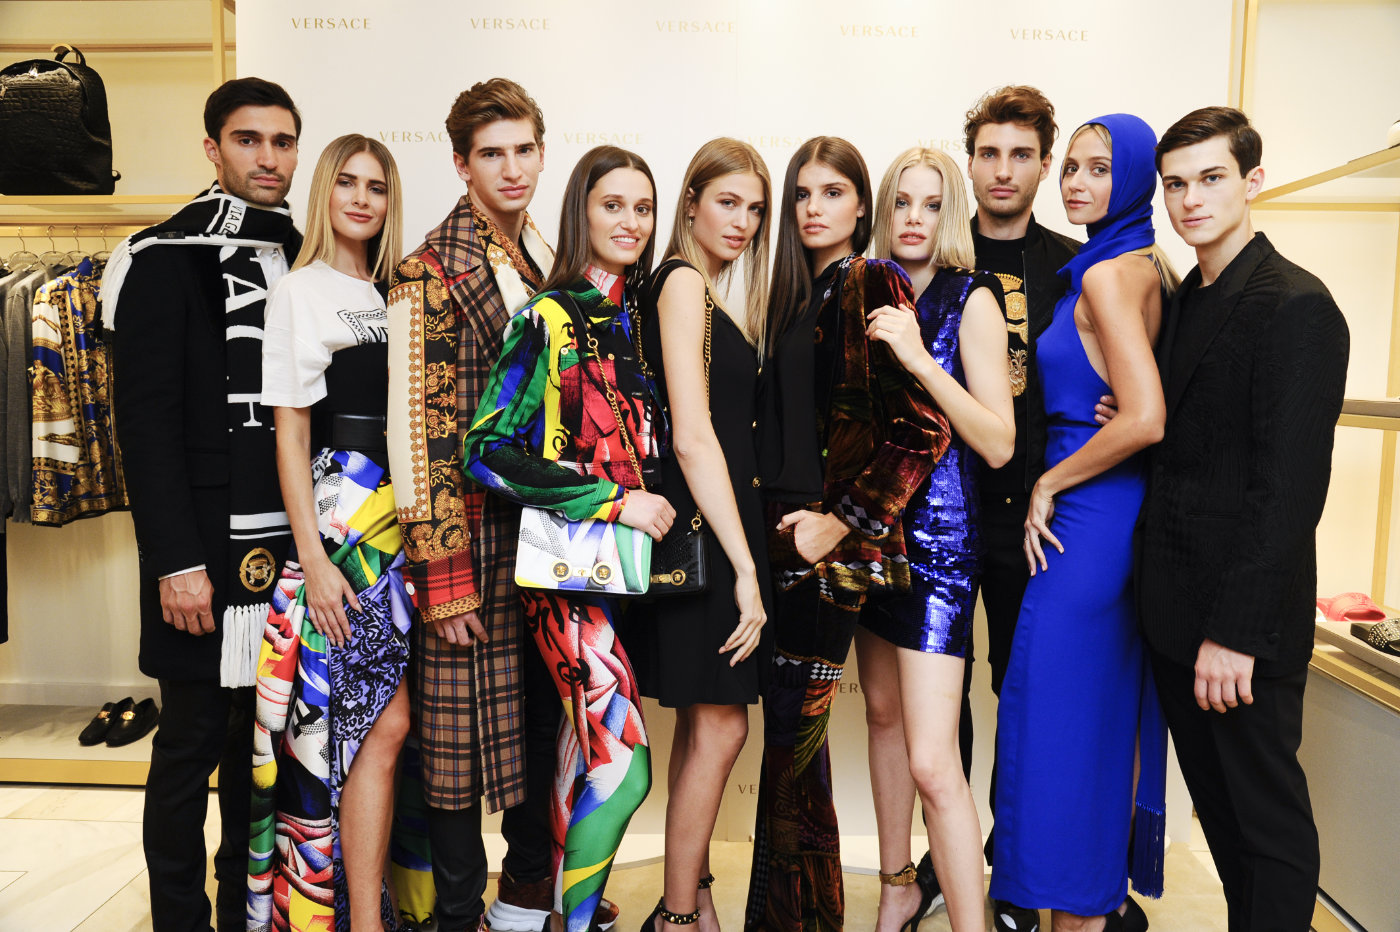 Gruppenfoto Versace Kollektion